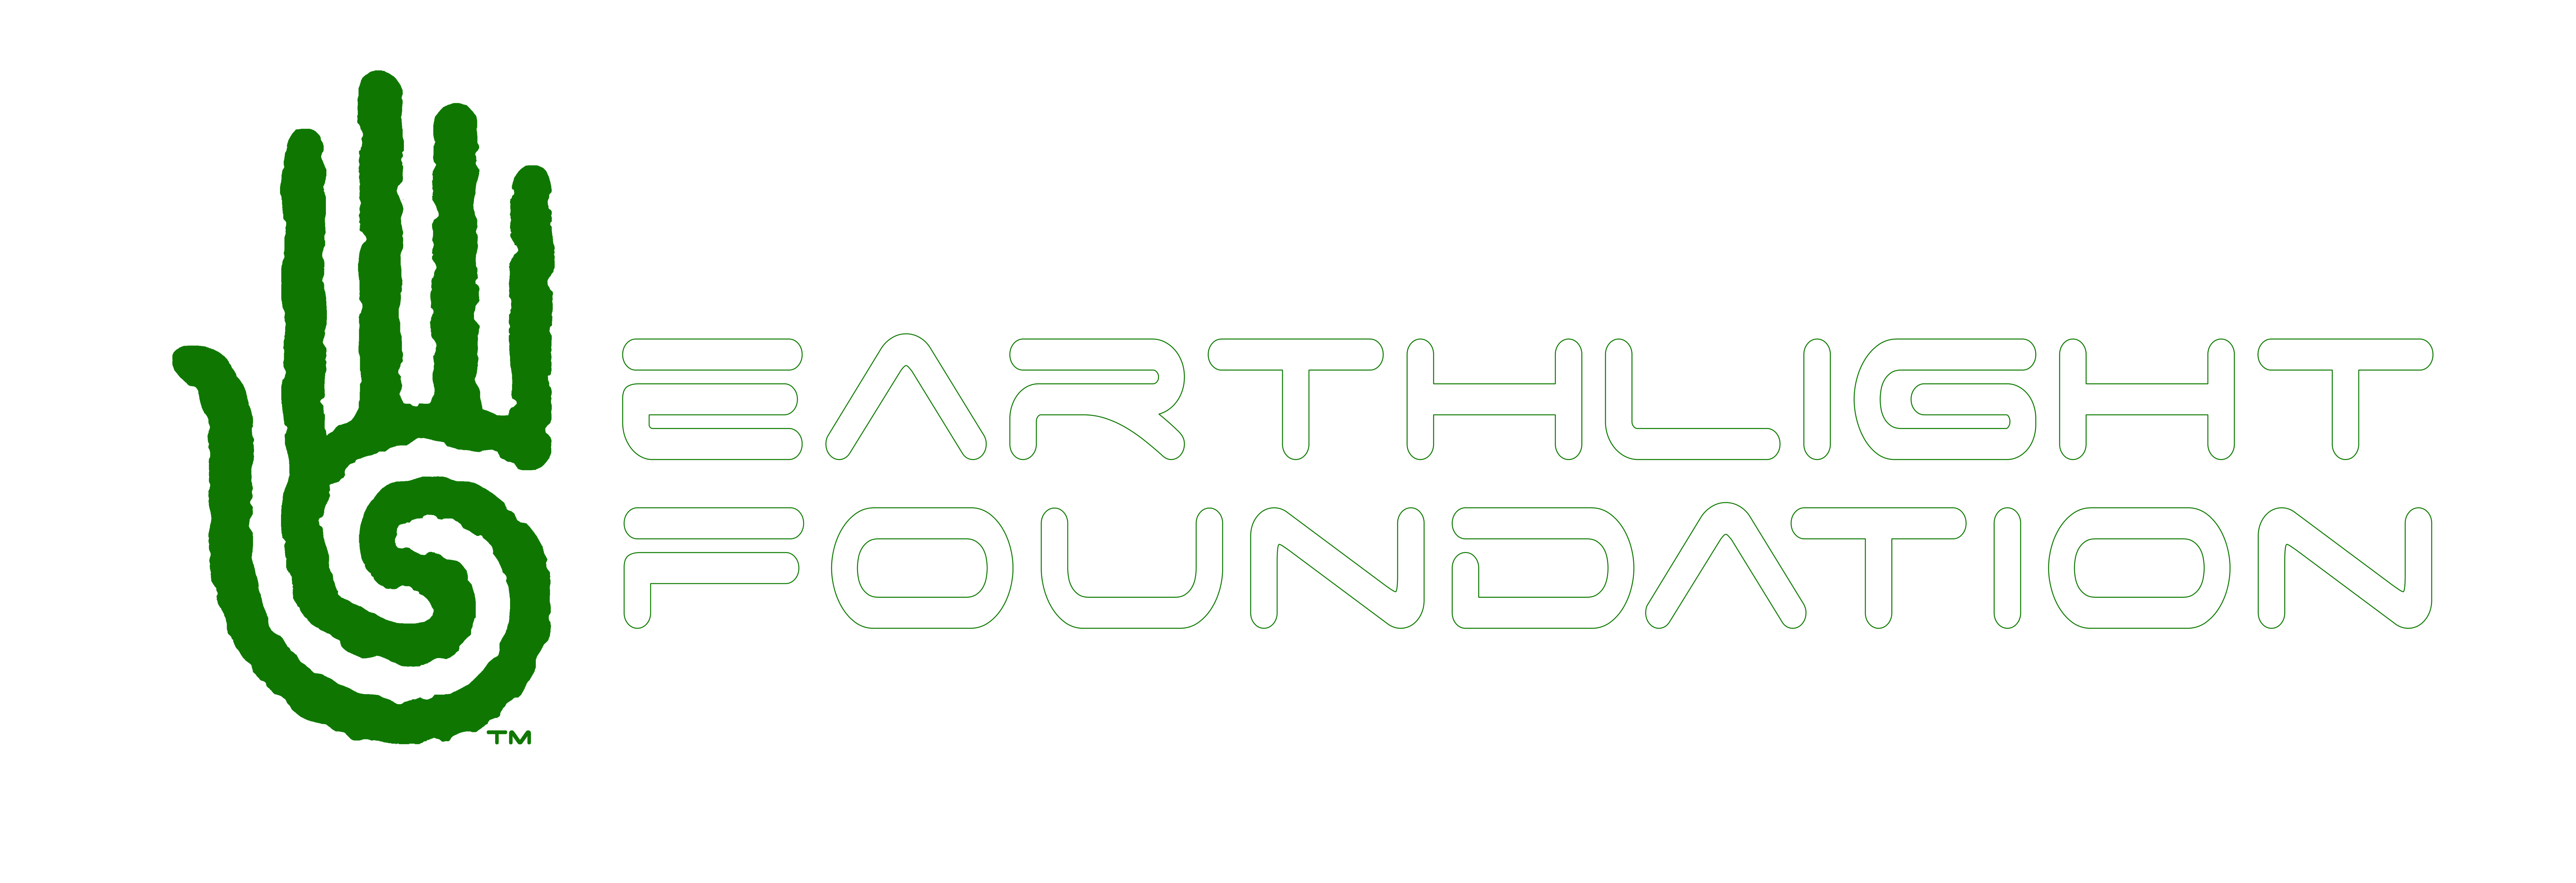 Earthlight Foundation